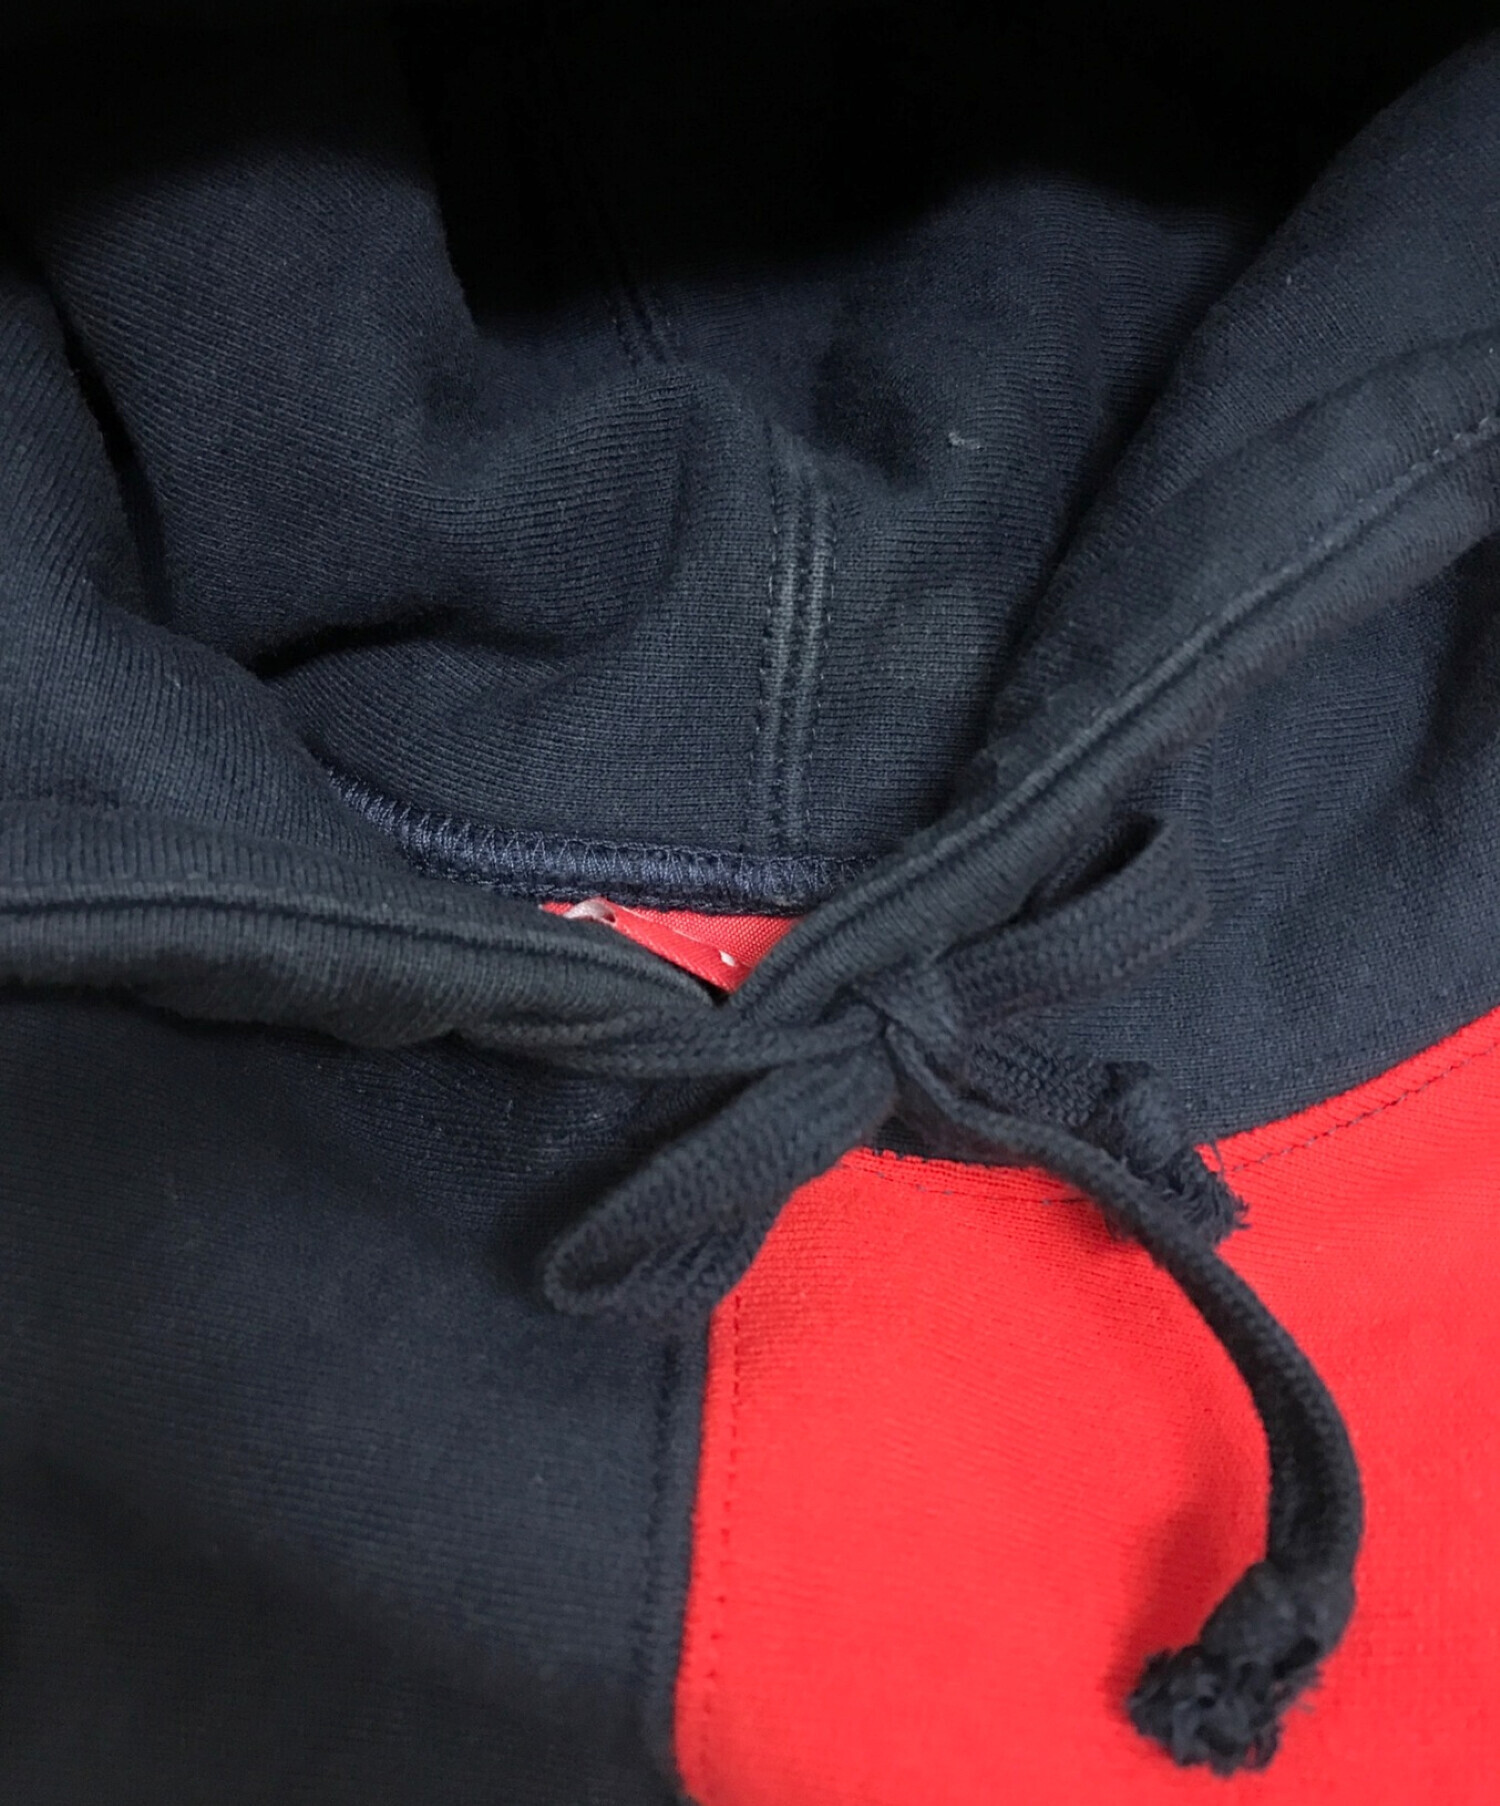 SUPREME (シュプリーム) Split Old English Hooded Sweatshirt ネイビー×レッド サイズ:L